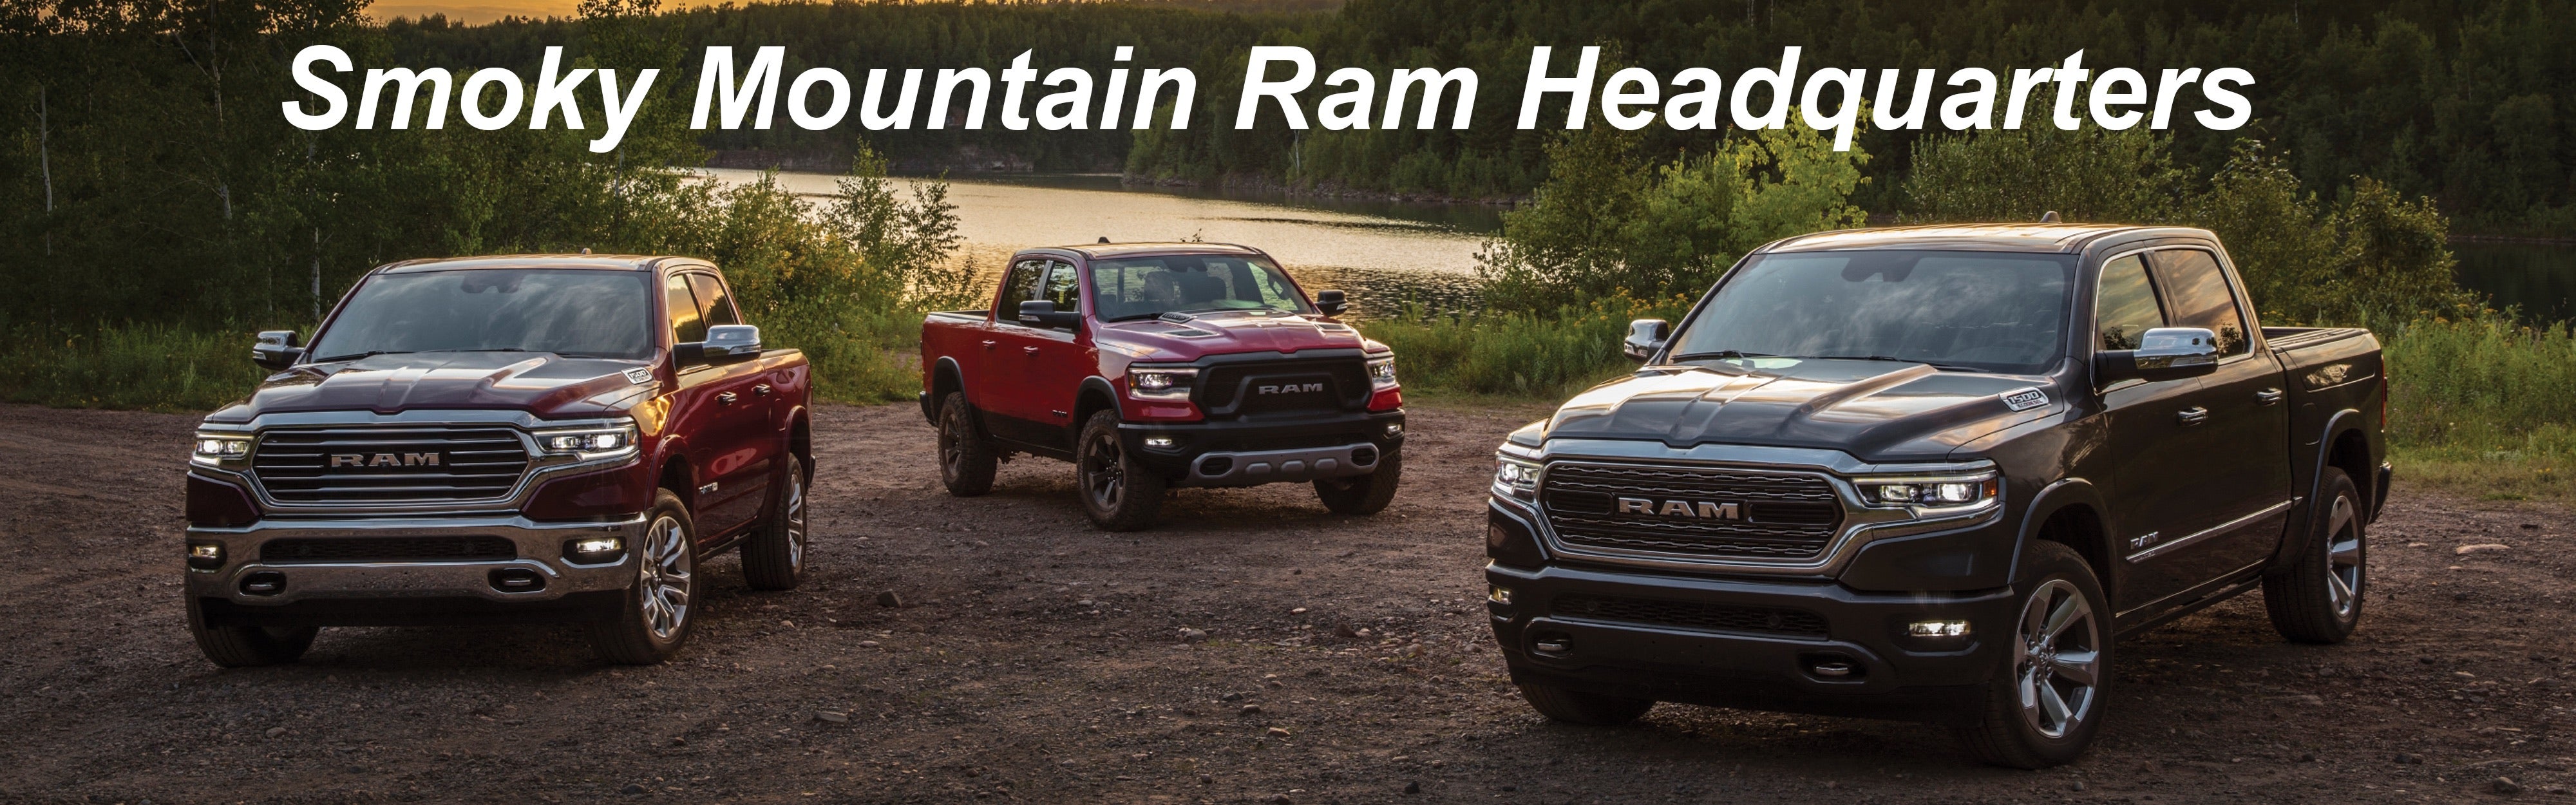 Your Smoky Mountain Ram HQ!